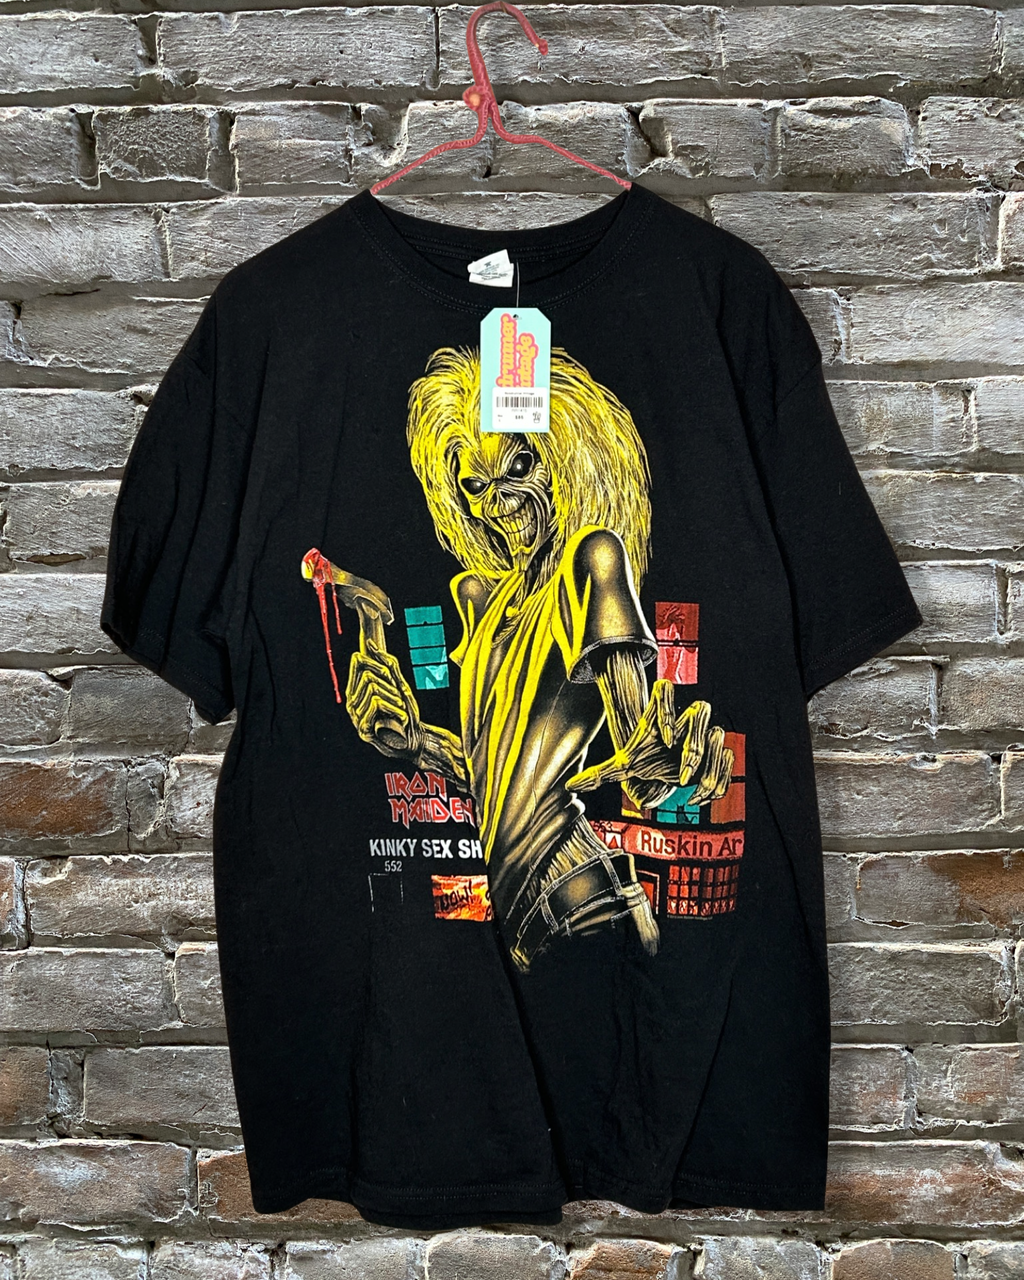 RR1454) Iron Maiden 'Kinky Show' Maiden in Tour 2012 T-Sh – Roadrunner Vintage